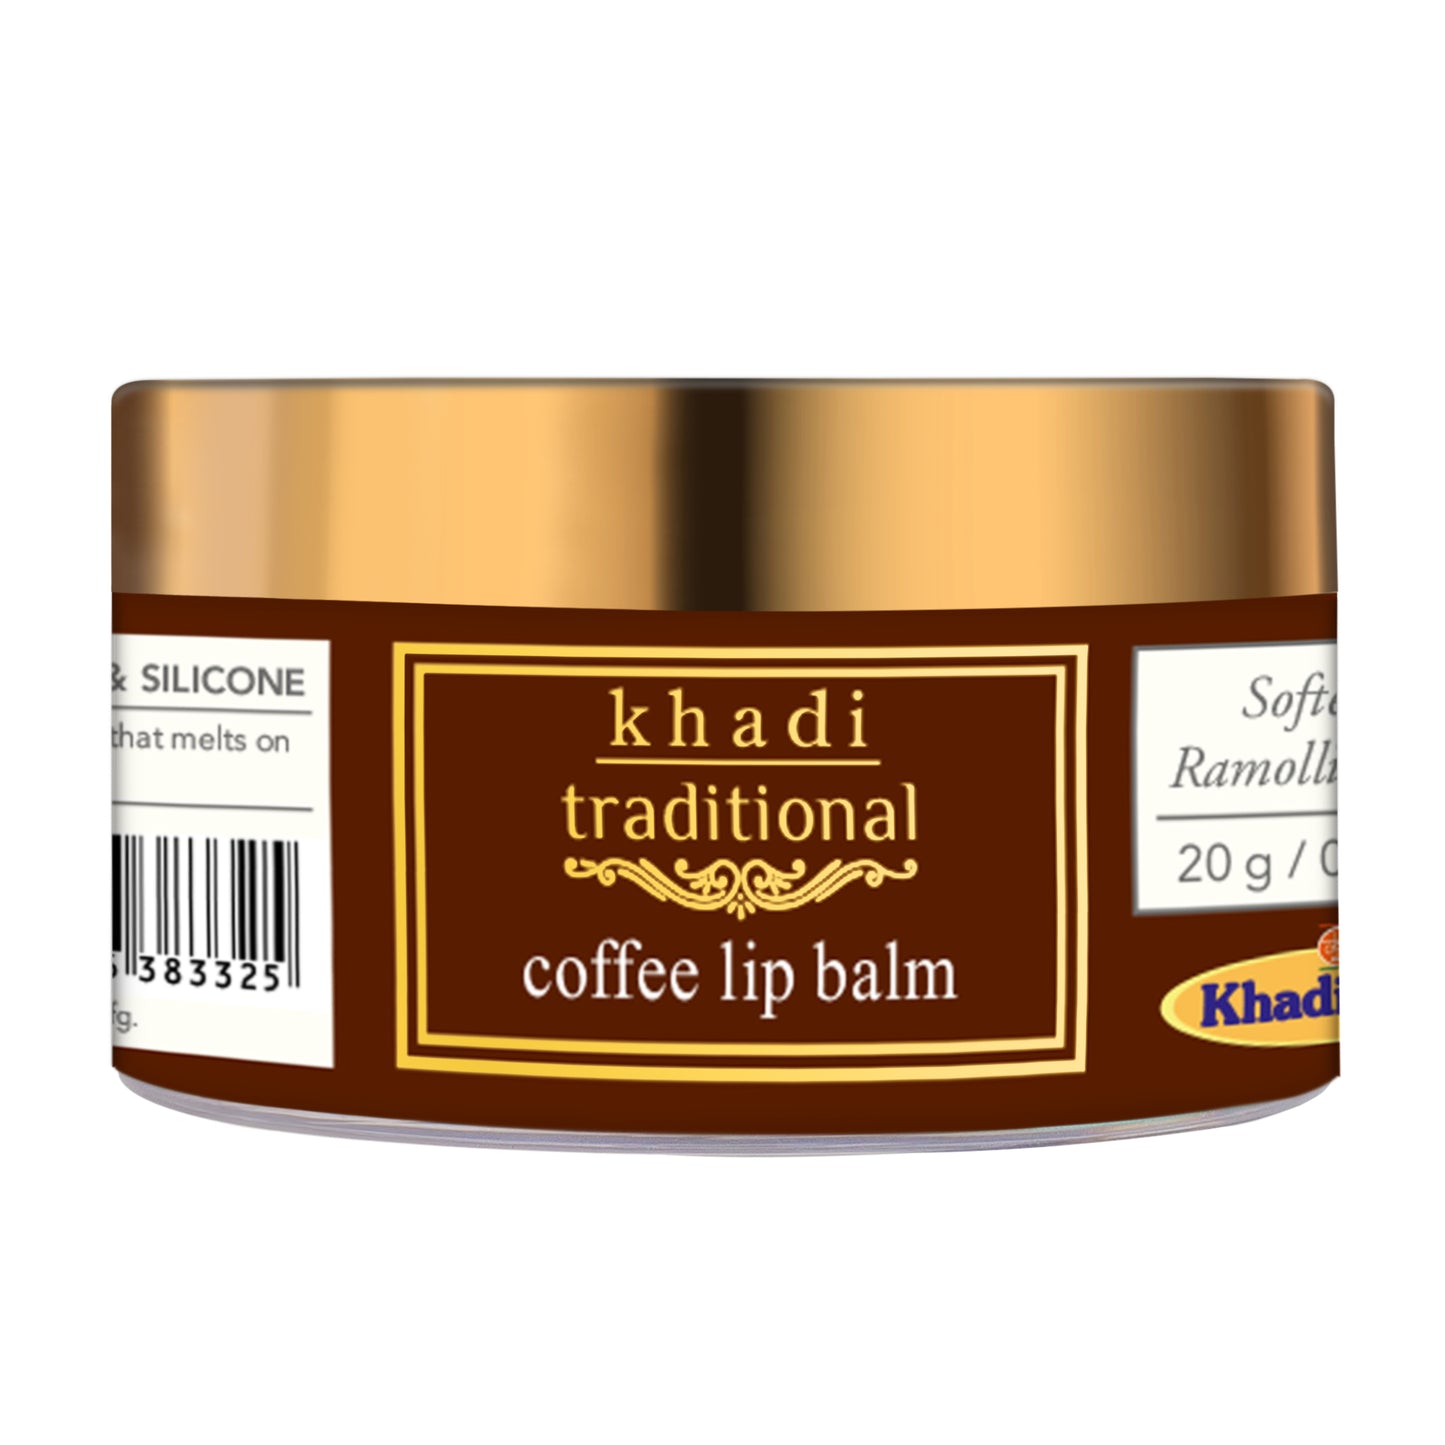 Coffee Lip Balm